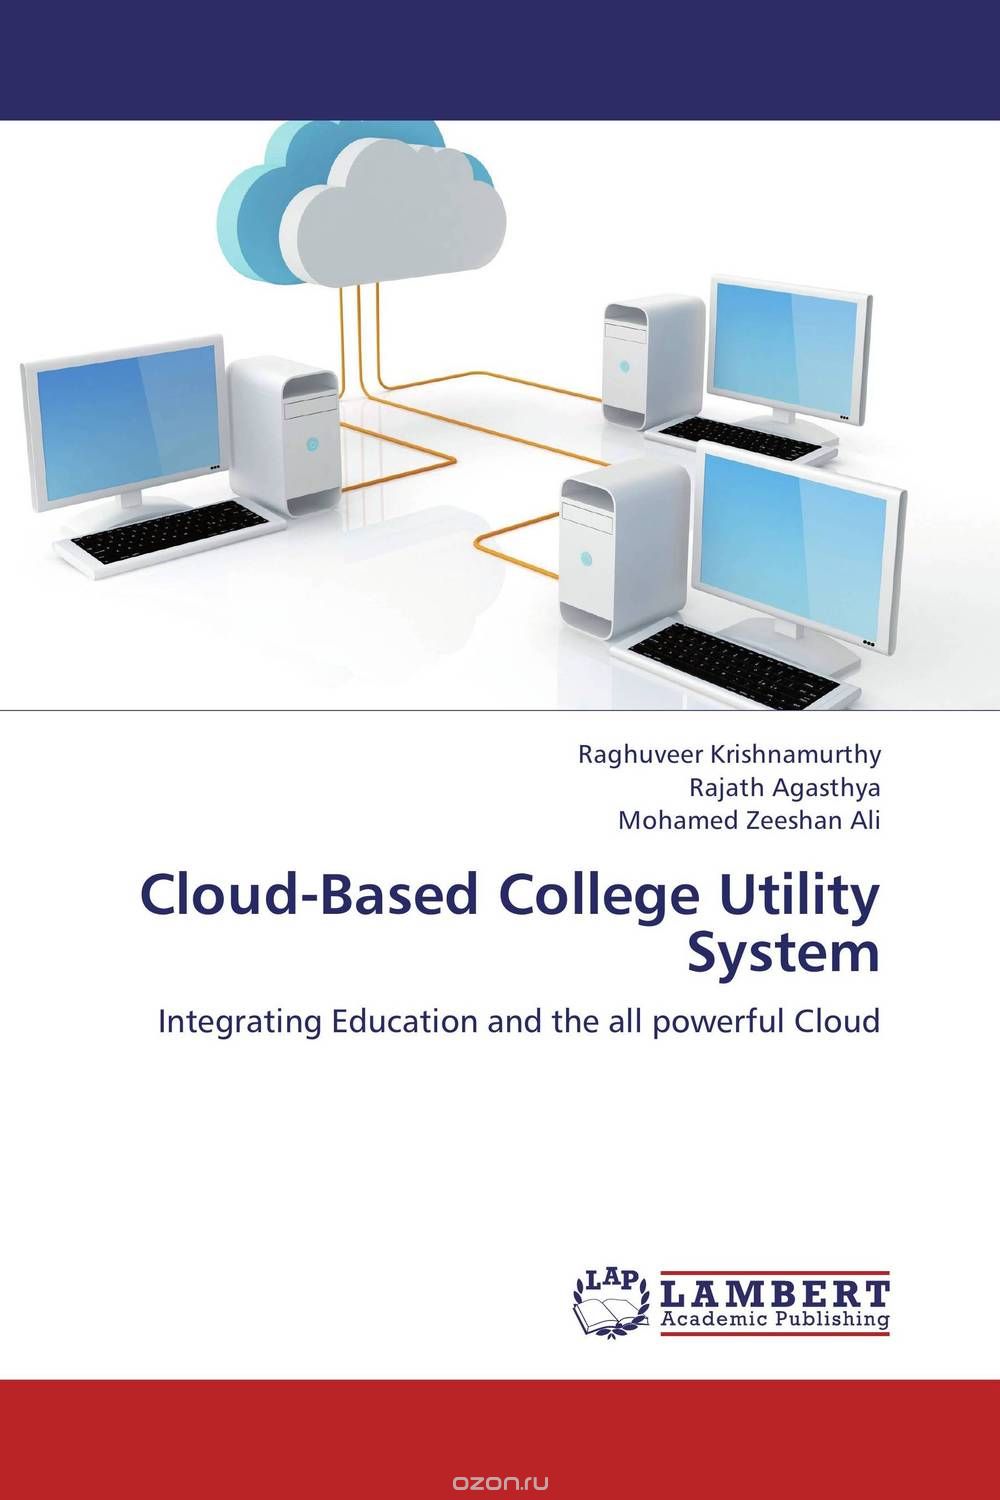 Скачать книгу "Cloud-Based College Utility System"